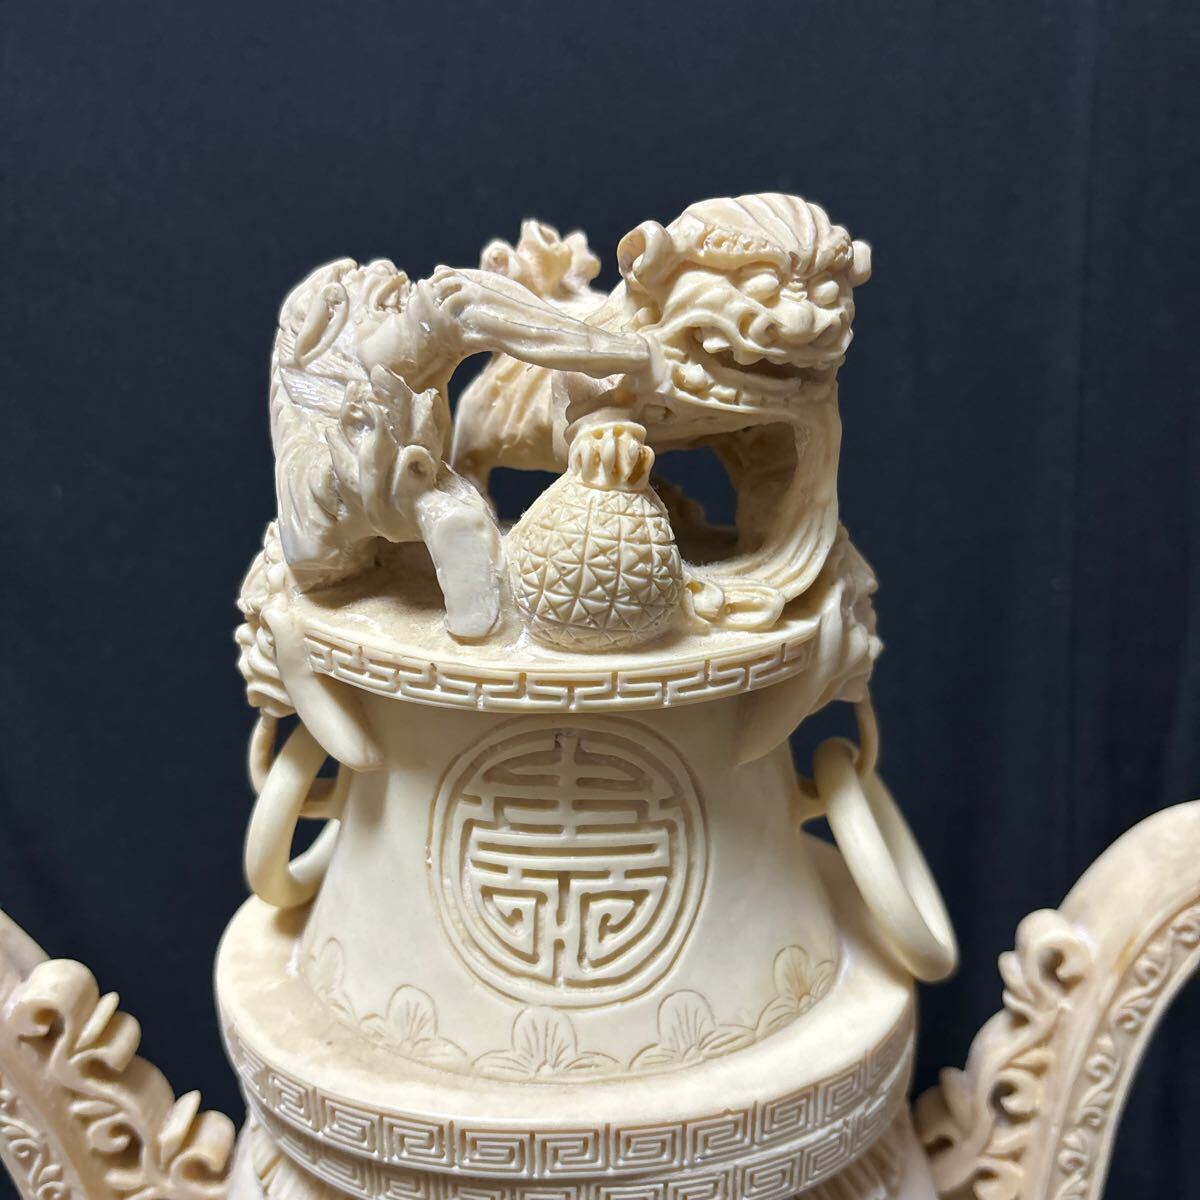 中國古美術 象牙風香炉 三つ脚 台座付き 高さ30から35㌢ 香炉 乾隆 獅子 中国美術 細密彫刻 玉獅子 香道具 飾り物 中国古玩の画像2